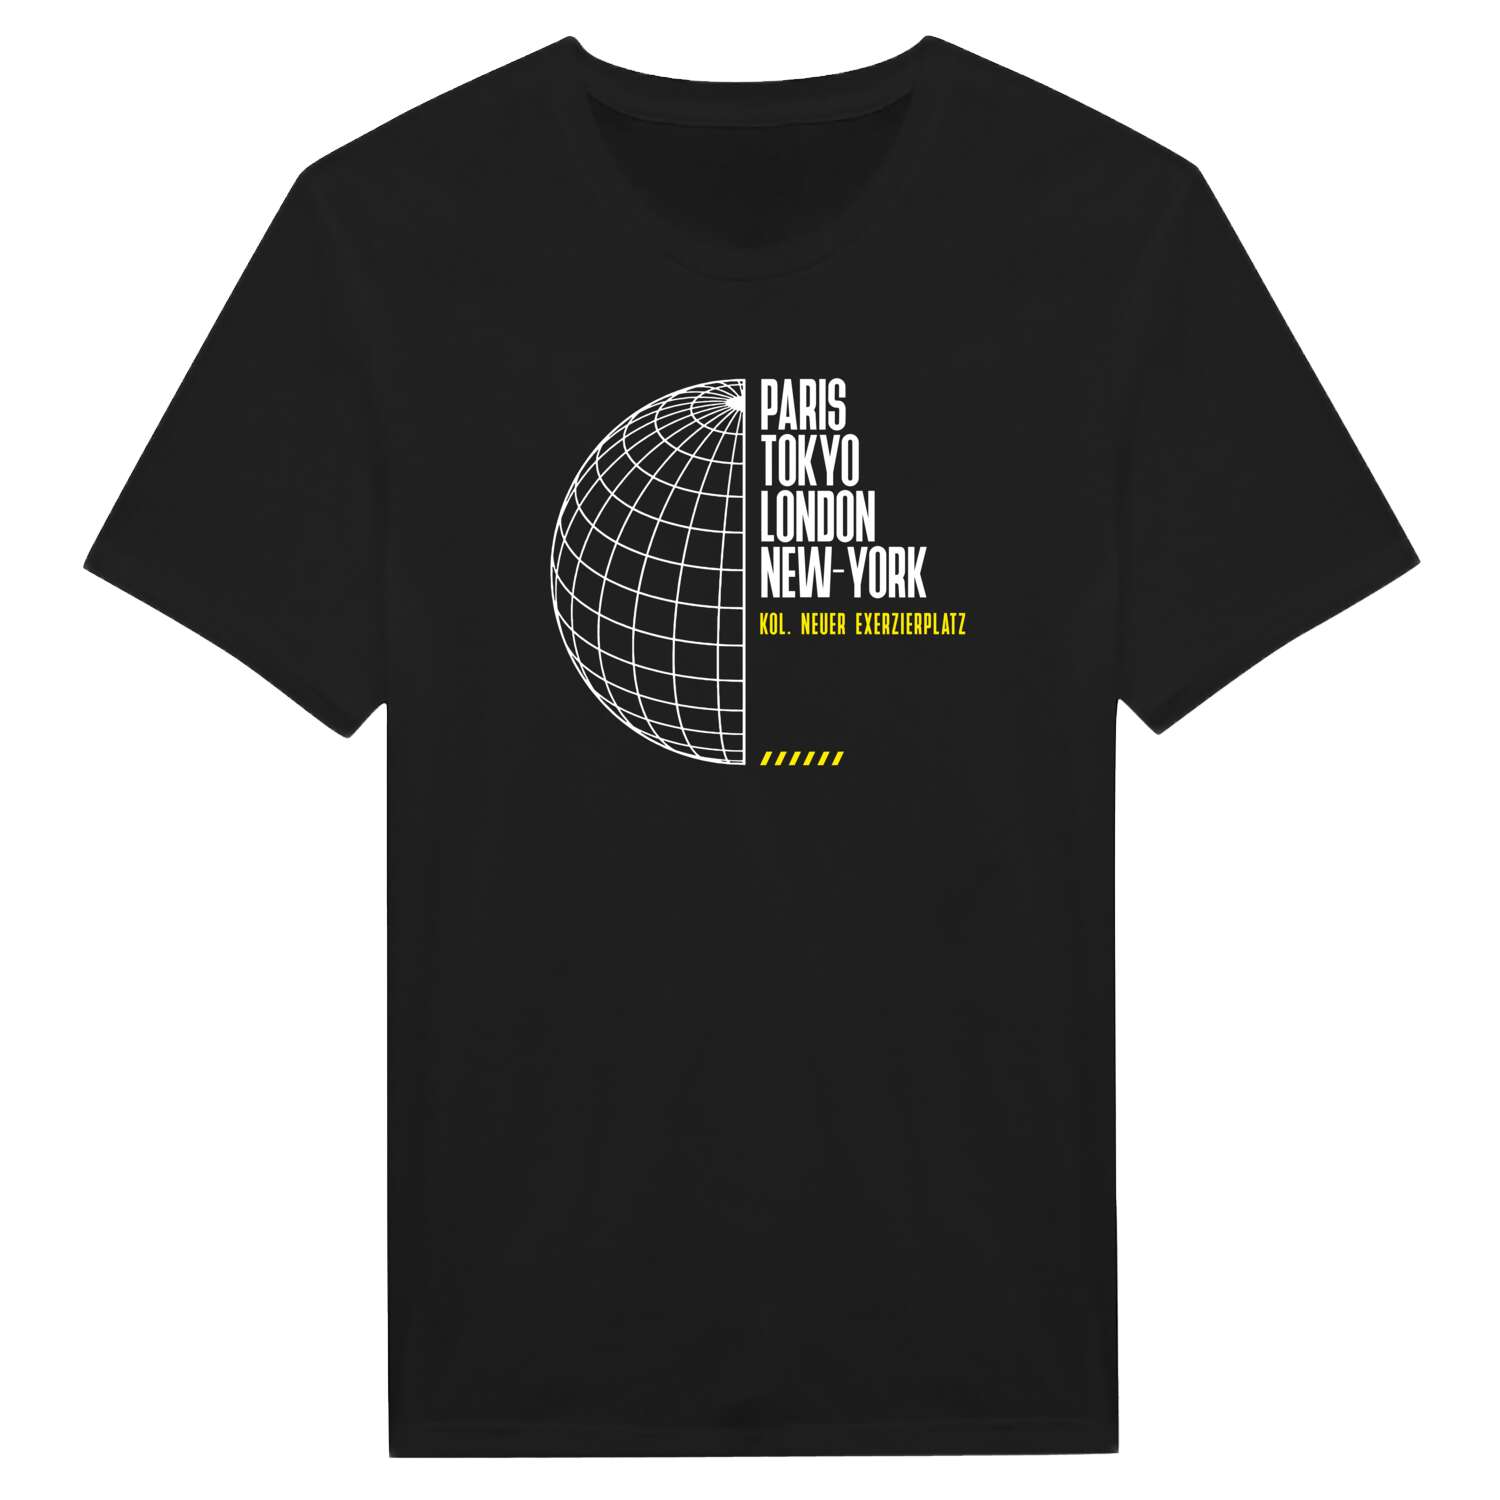 Kol. Neuer Exerzierplatz T-Shirt »Paris Tokyo London«